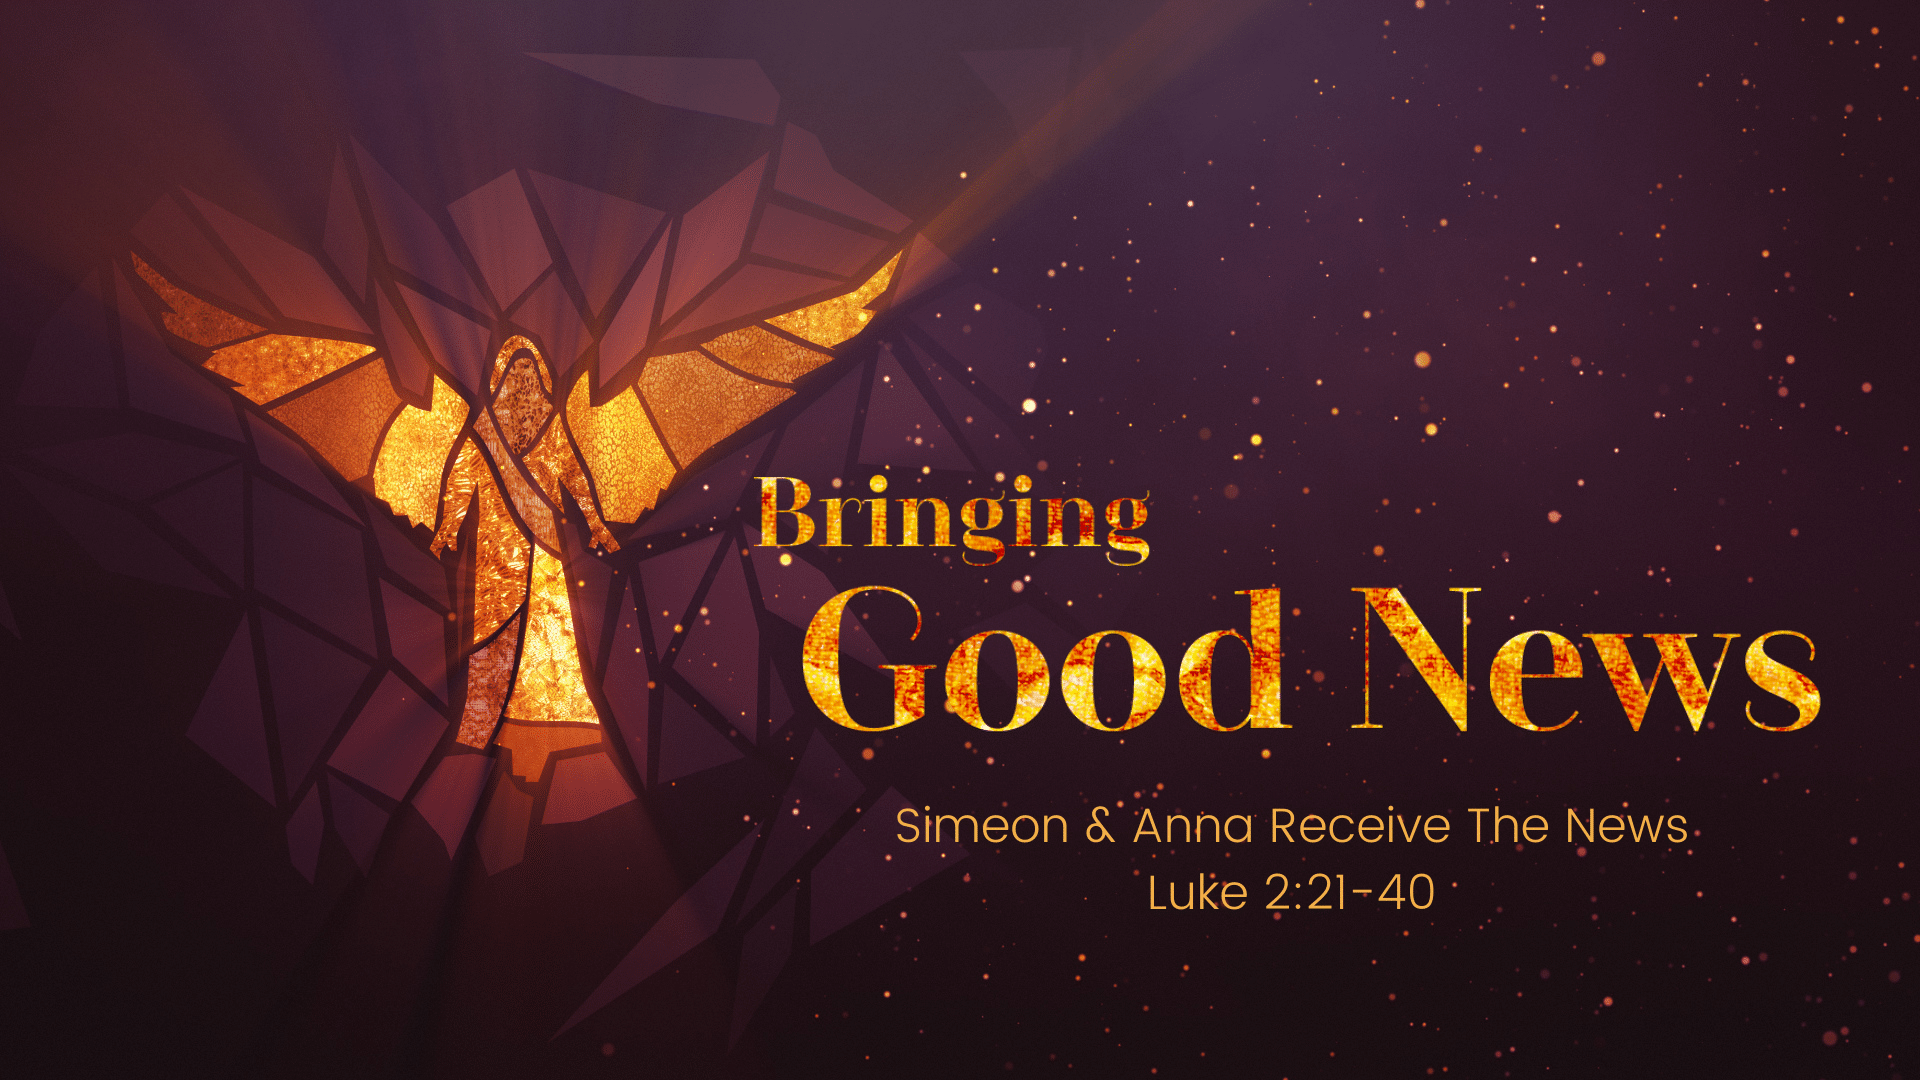 Bringing Good News: Simeon & Anna Receive The News